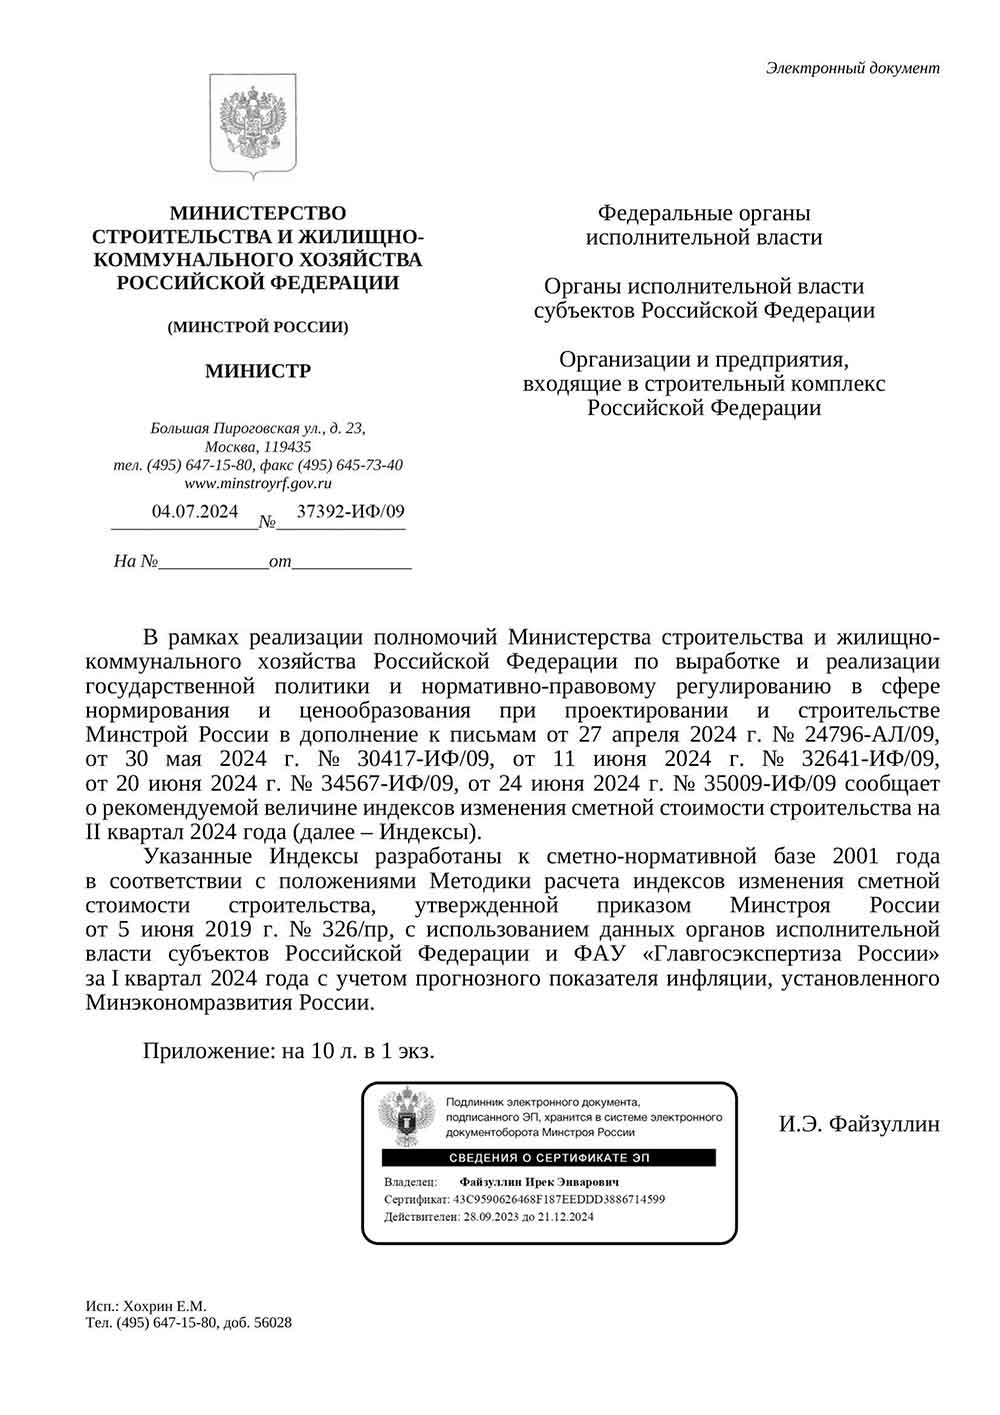 Письмо Минстроя РФ №37392-ИФ/09 от 04.07.2024 г.